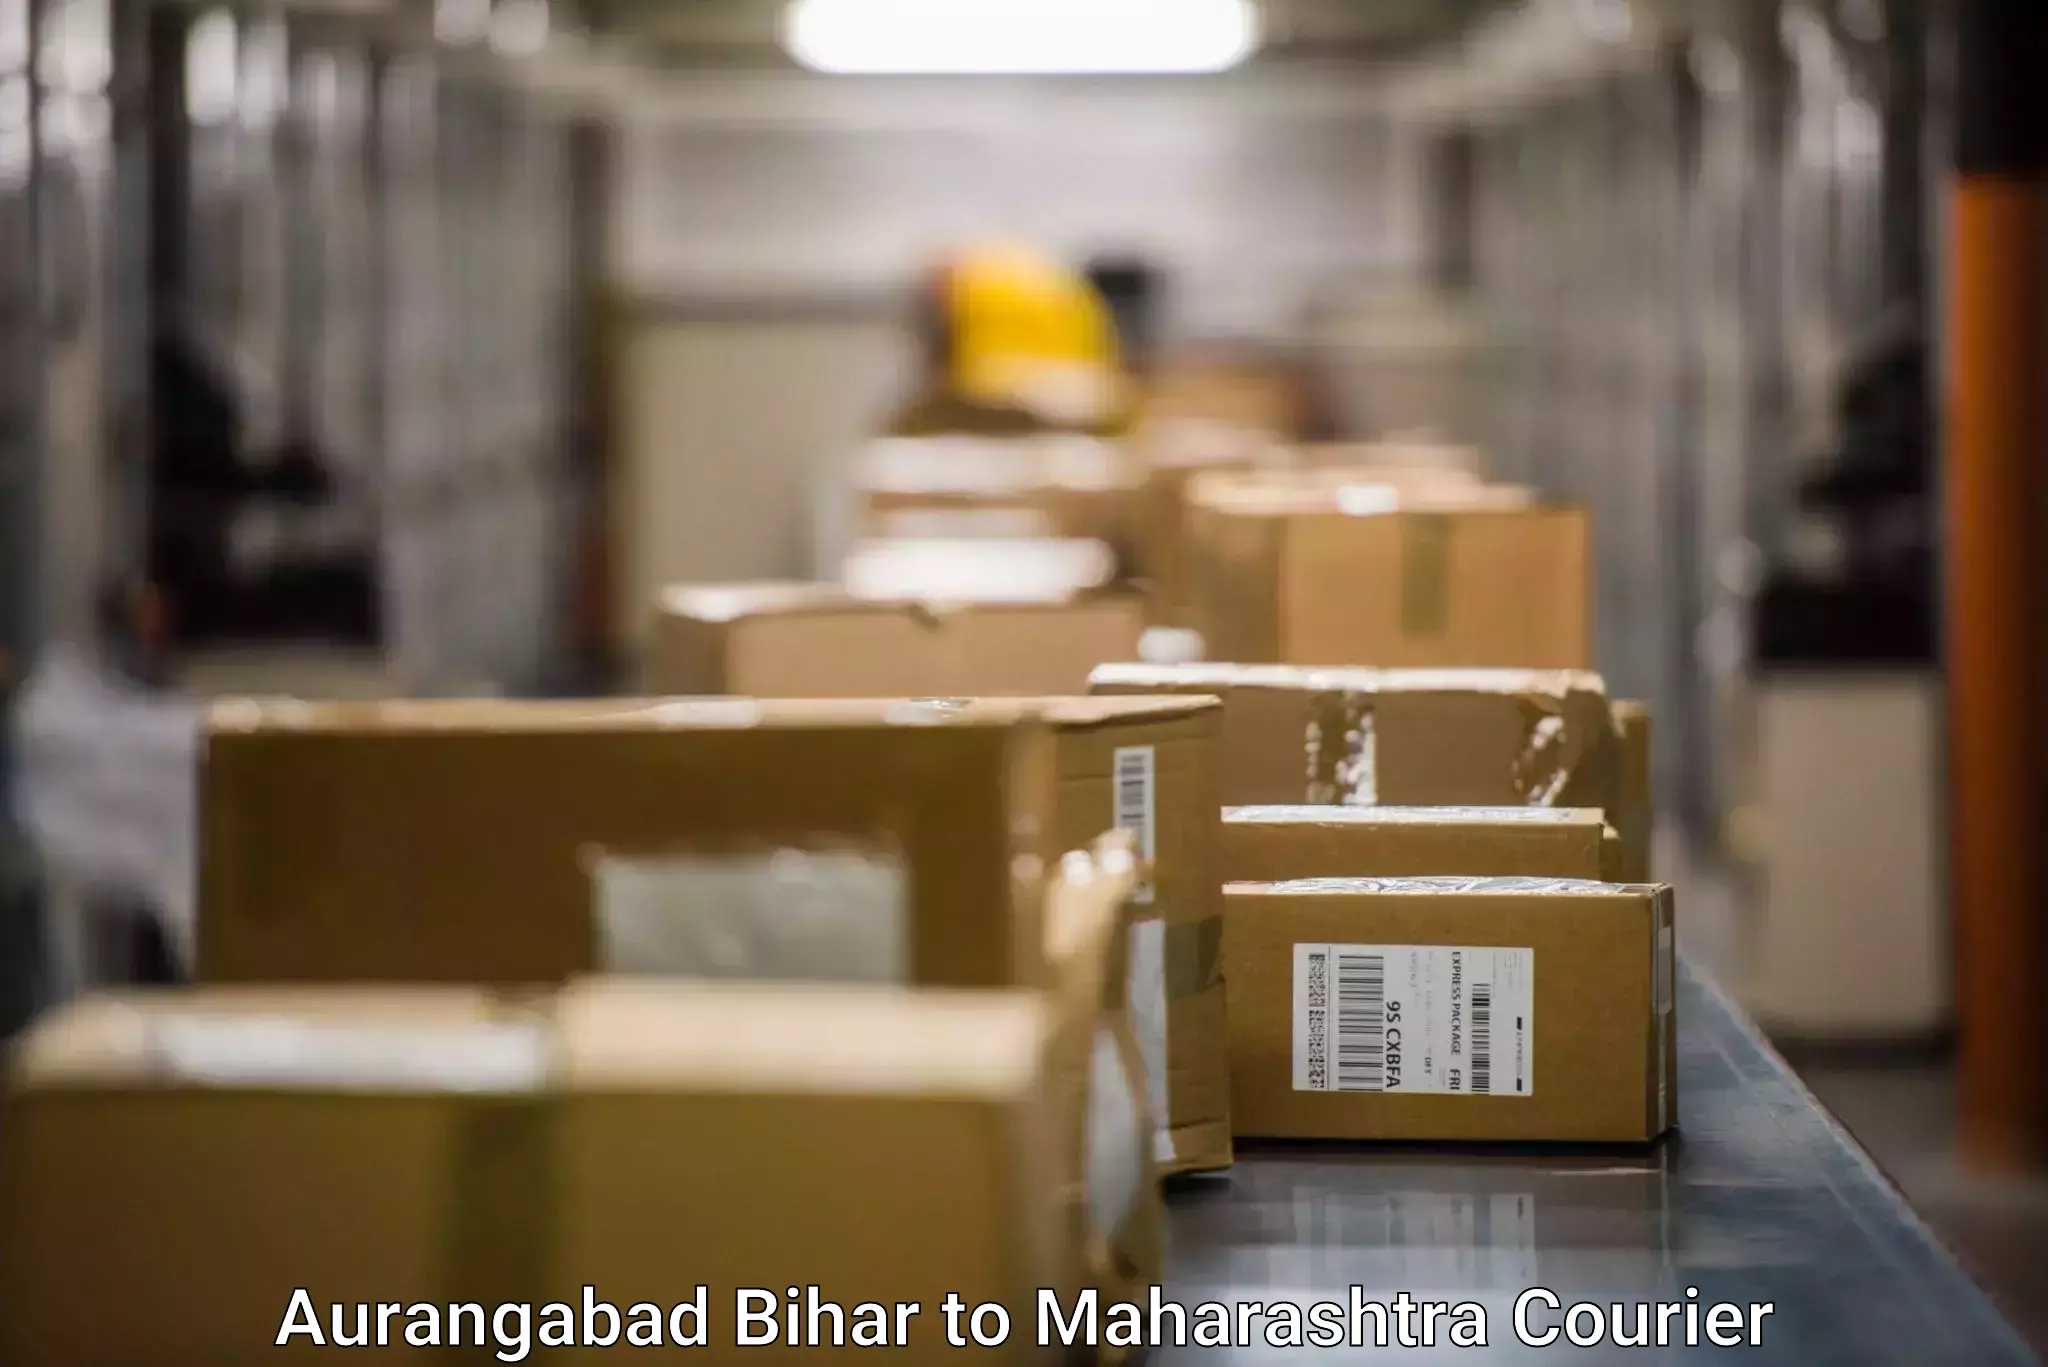 Personal parcel delivery Aurangabad Bihar to Lonere